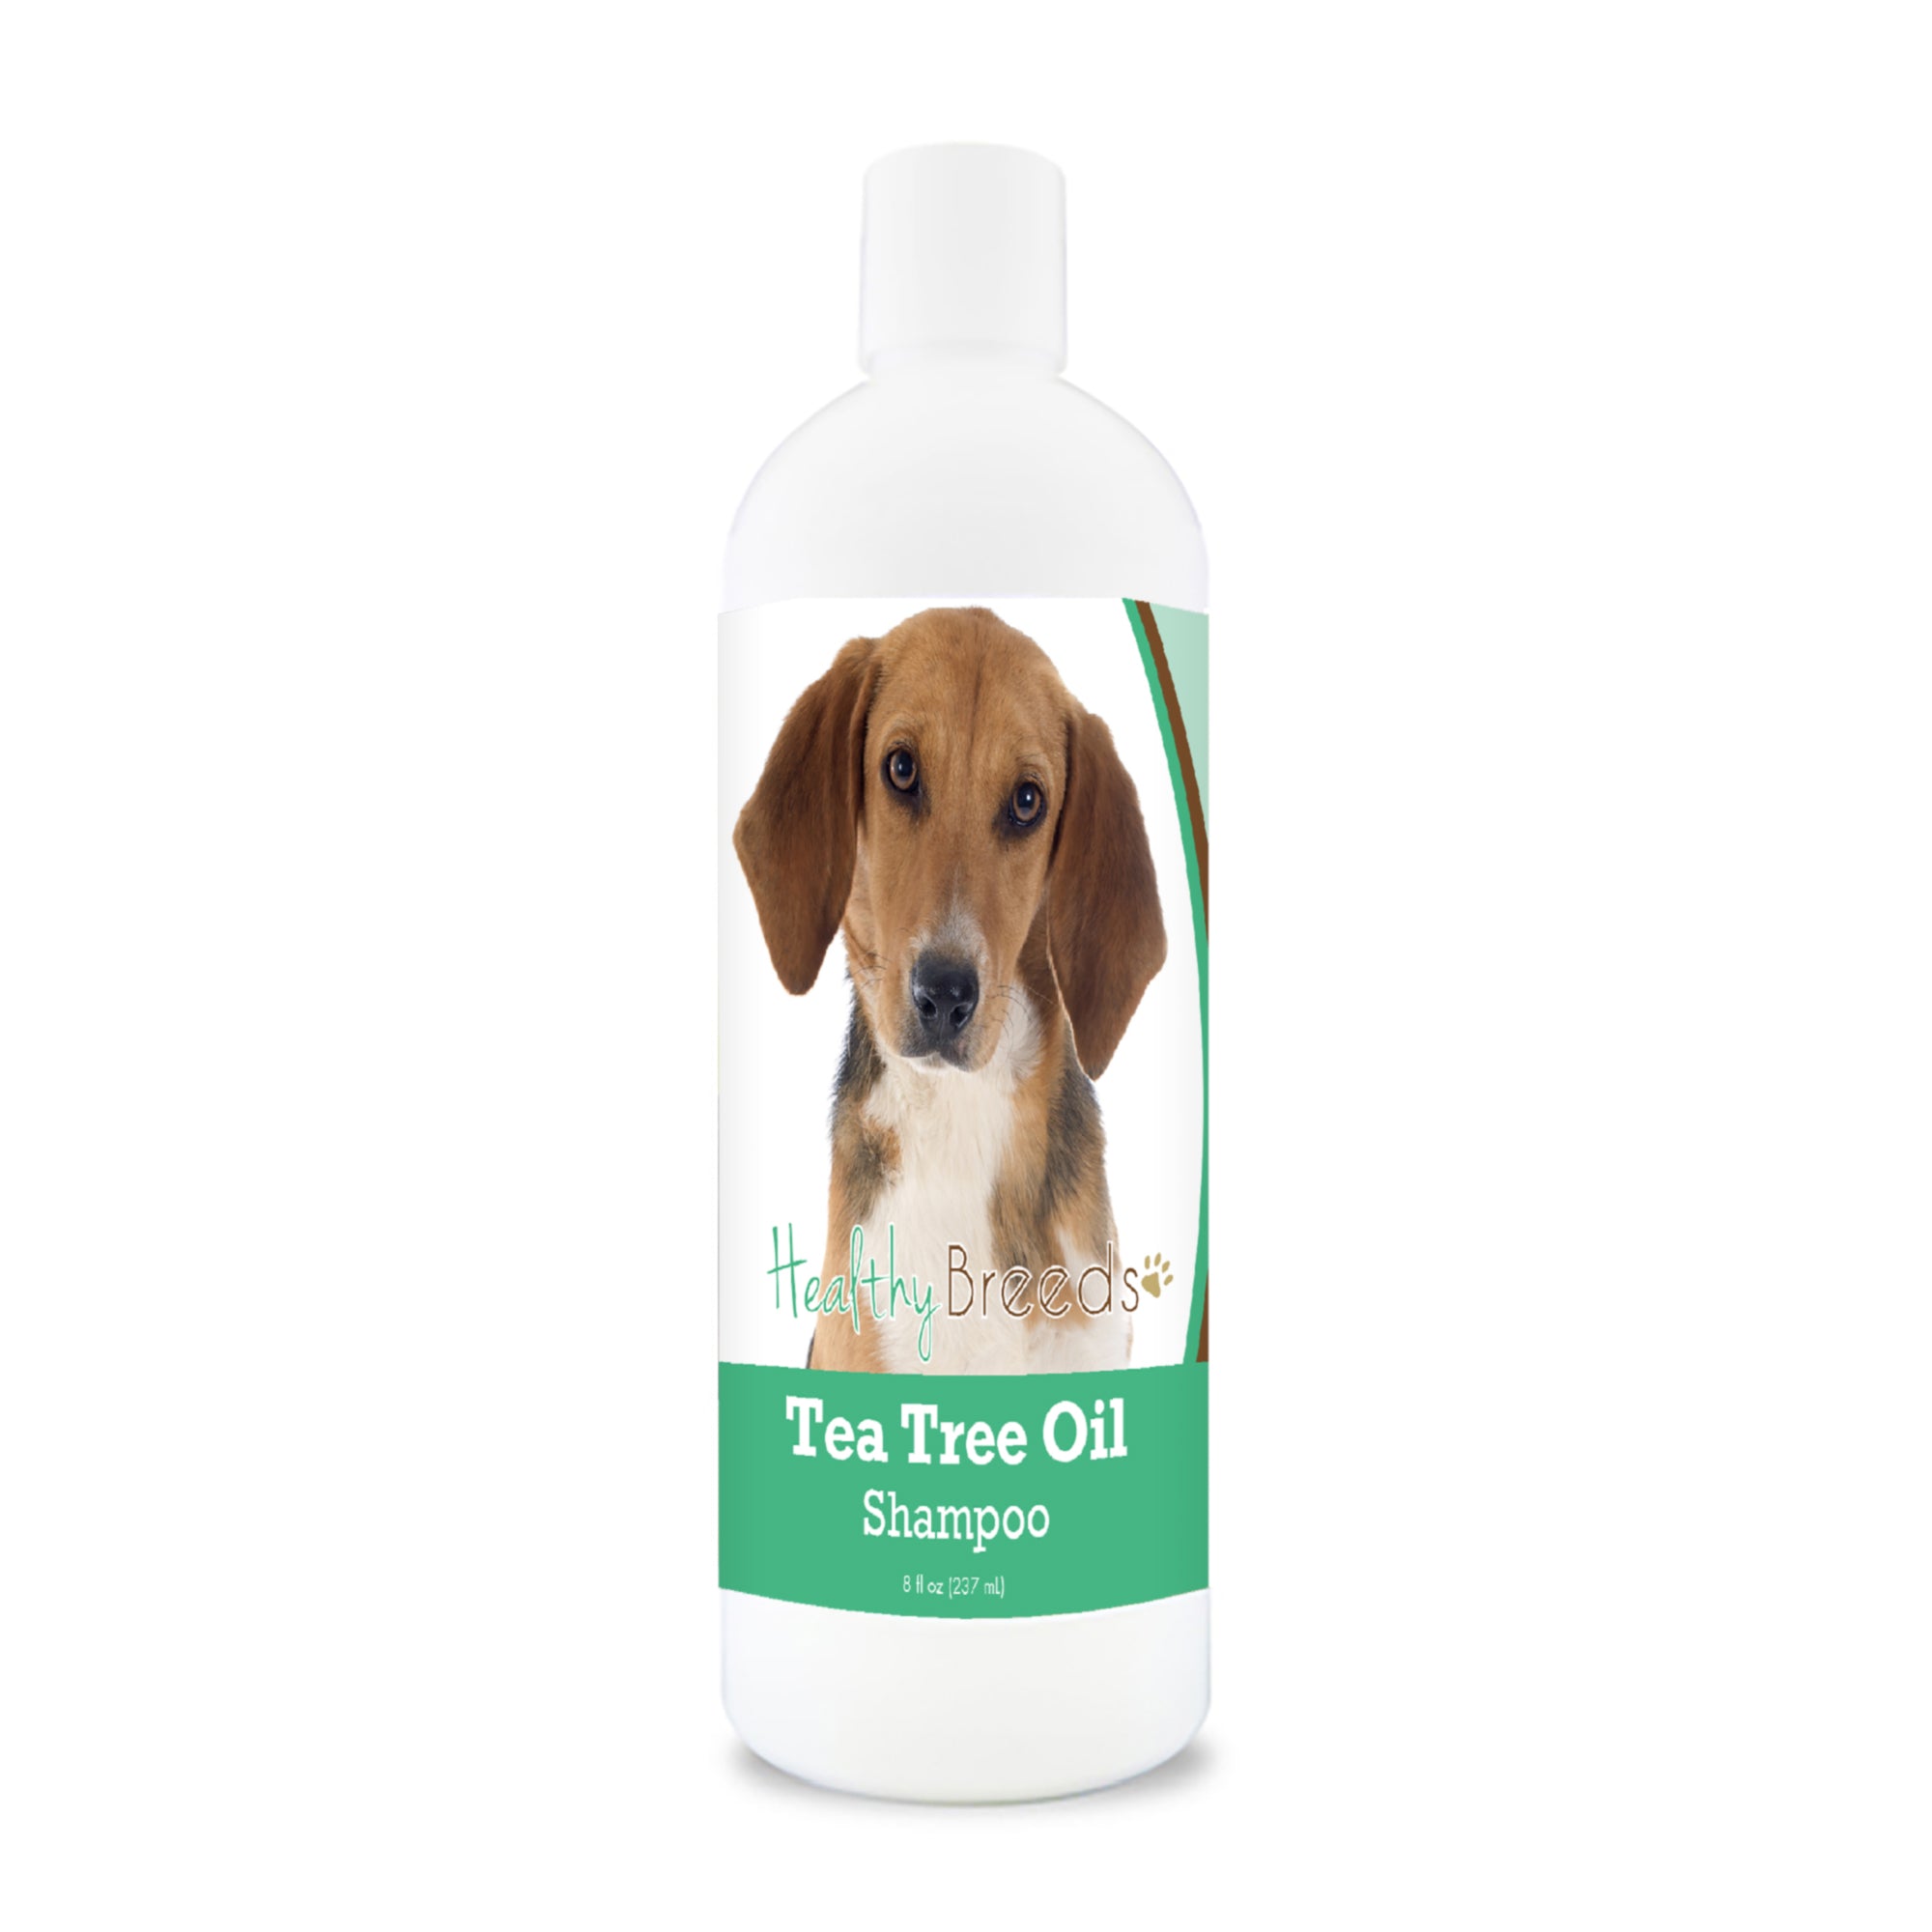 Harrier Tea Tree Oil Shampoo 8 oz